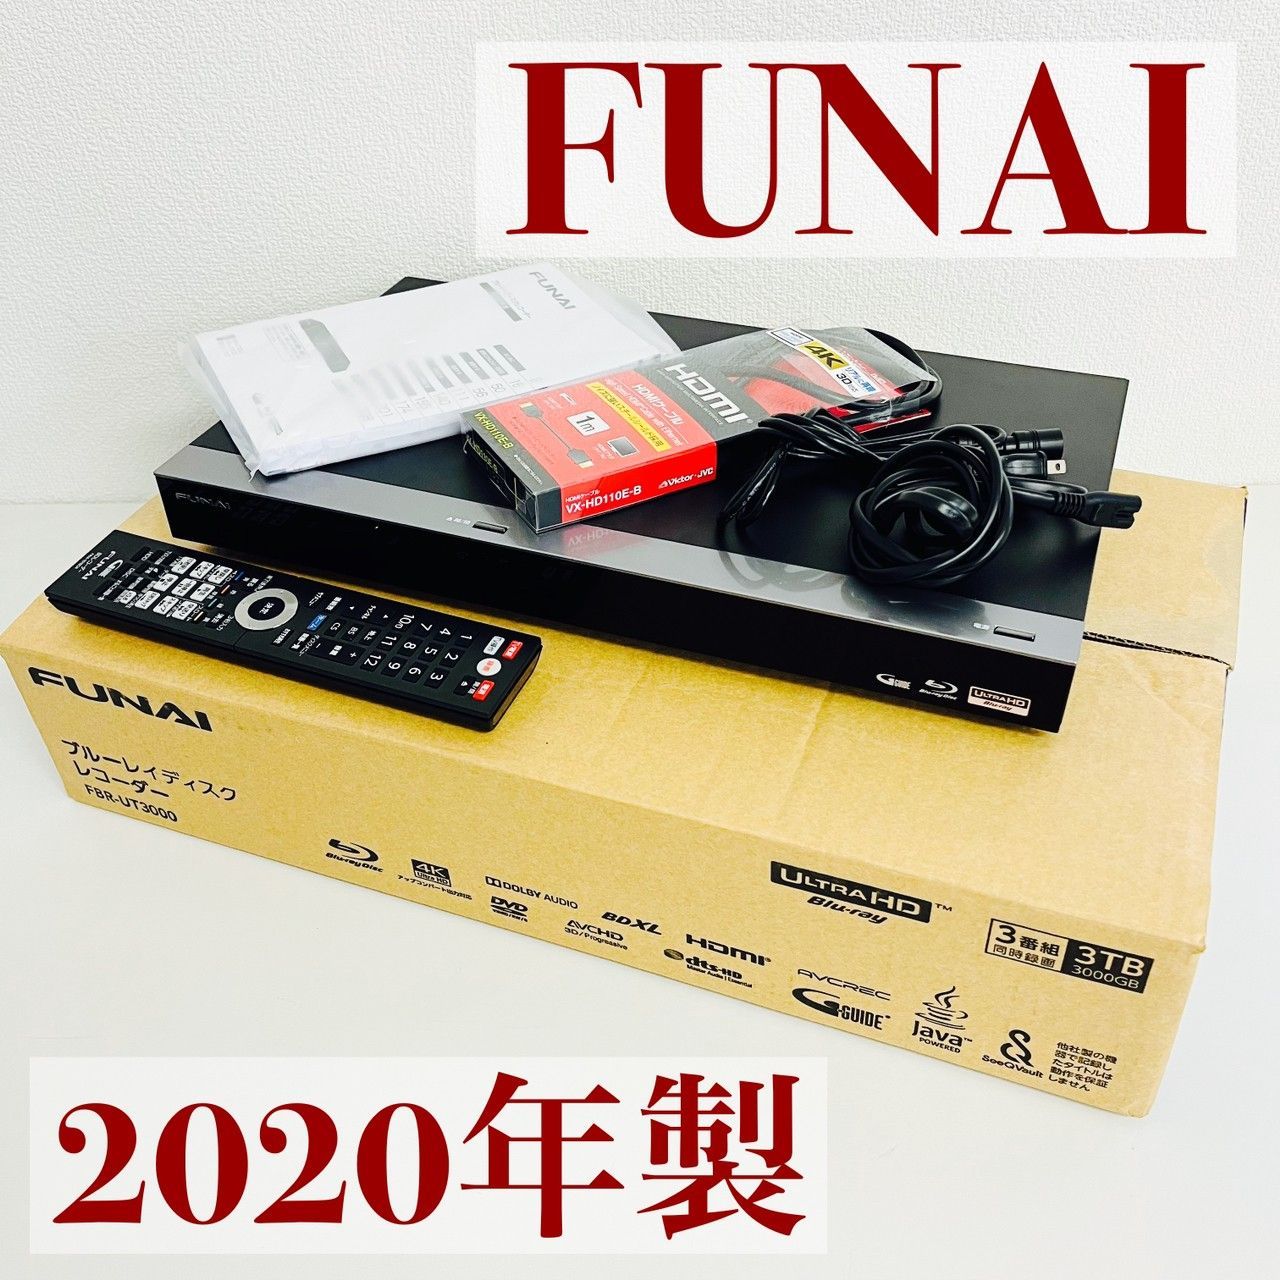 FUNAI ブルーレイディスクレコーダー 2020年製 FBR-UT3000 3番組同時